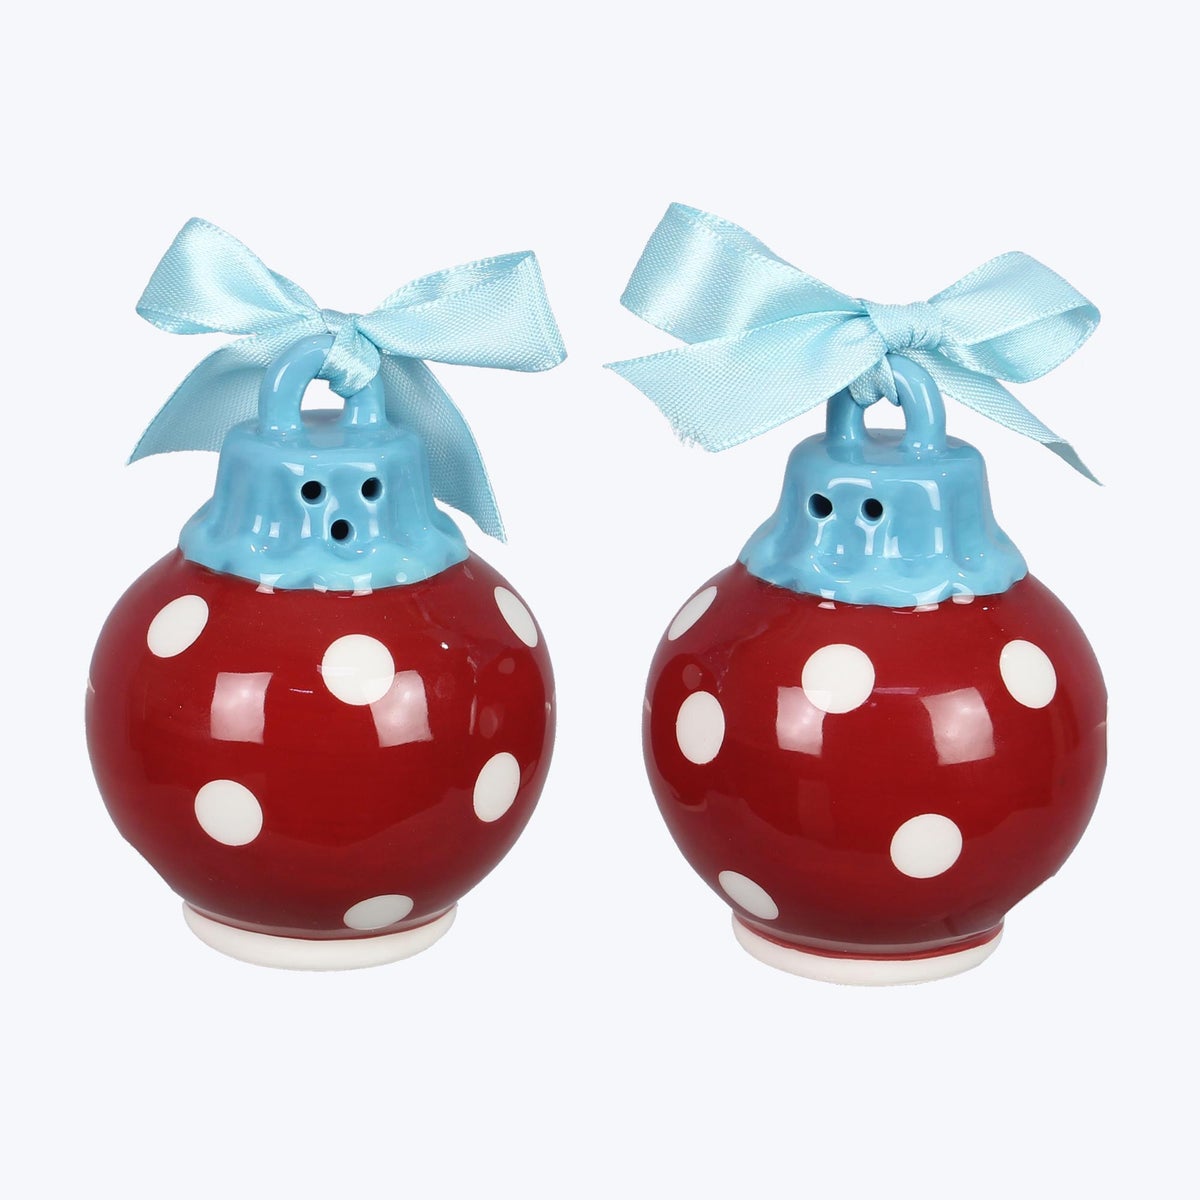 Ceramic Colorful Christmas Ornament Ball Shaped Salt and Pepper Shaker Set, S/P